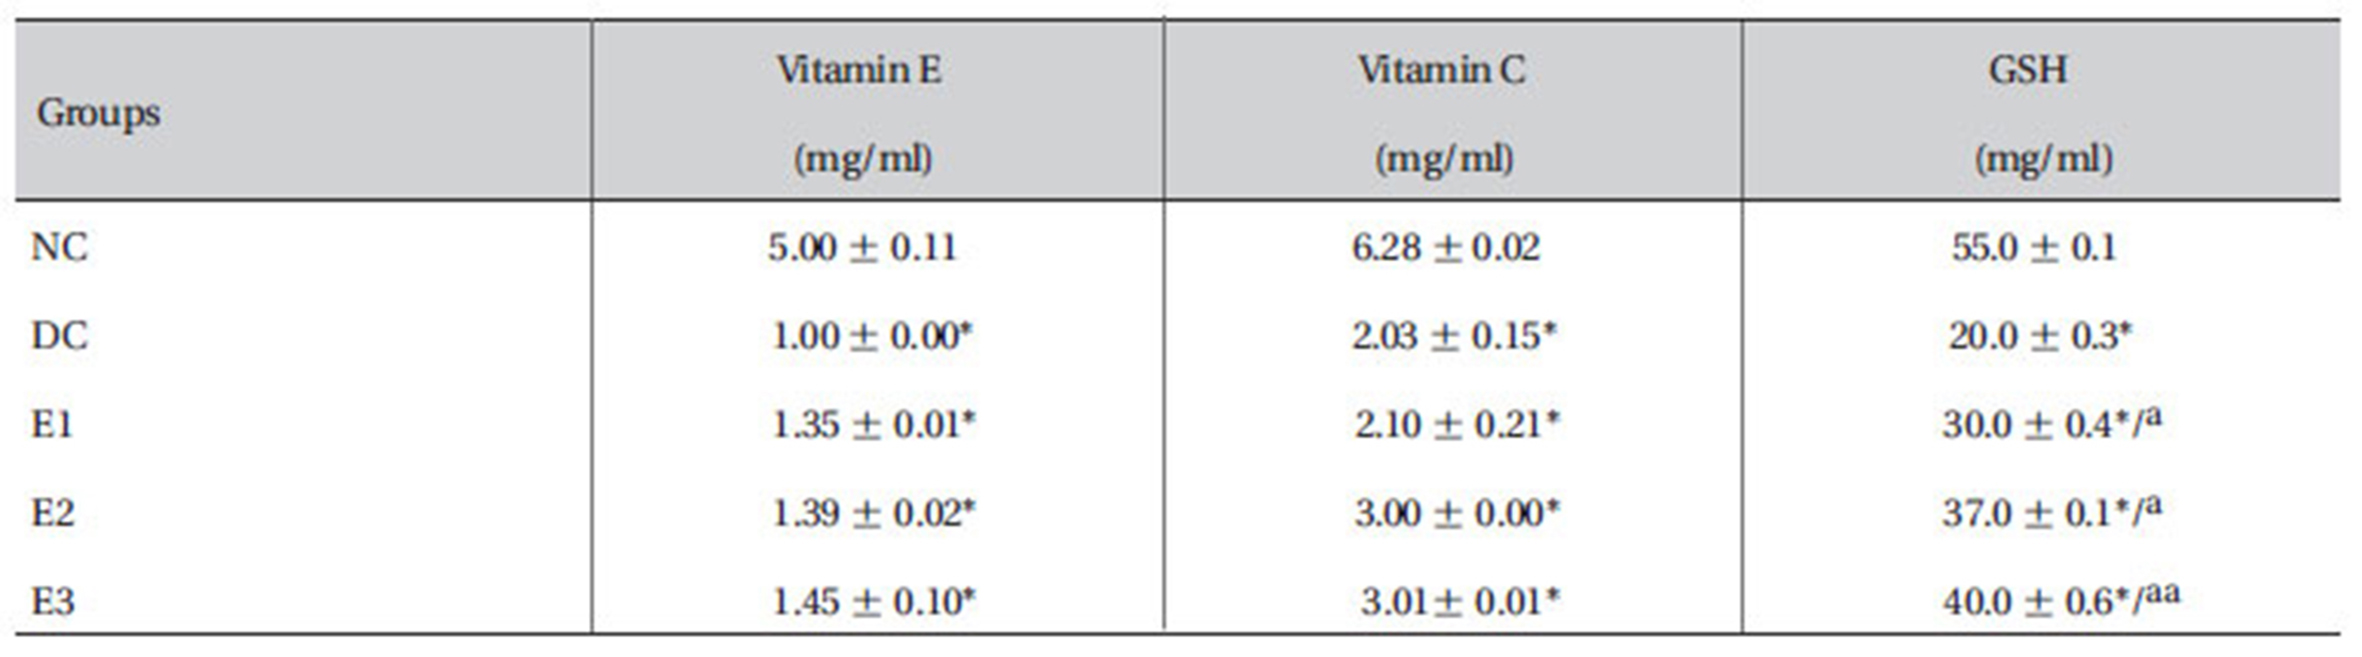 Effect of ZMFM on GSH, vitamin C and vitamin E of dimethoate-treated rats